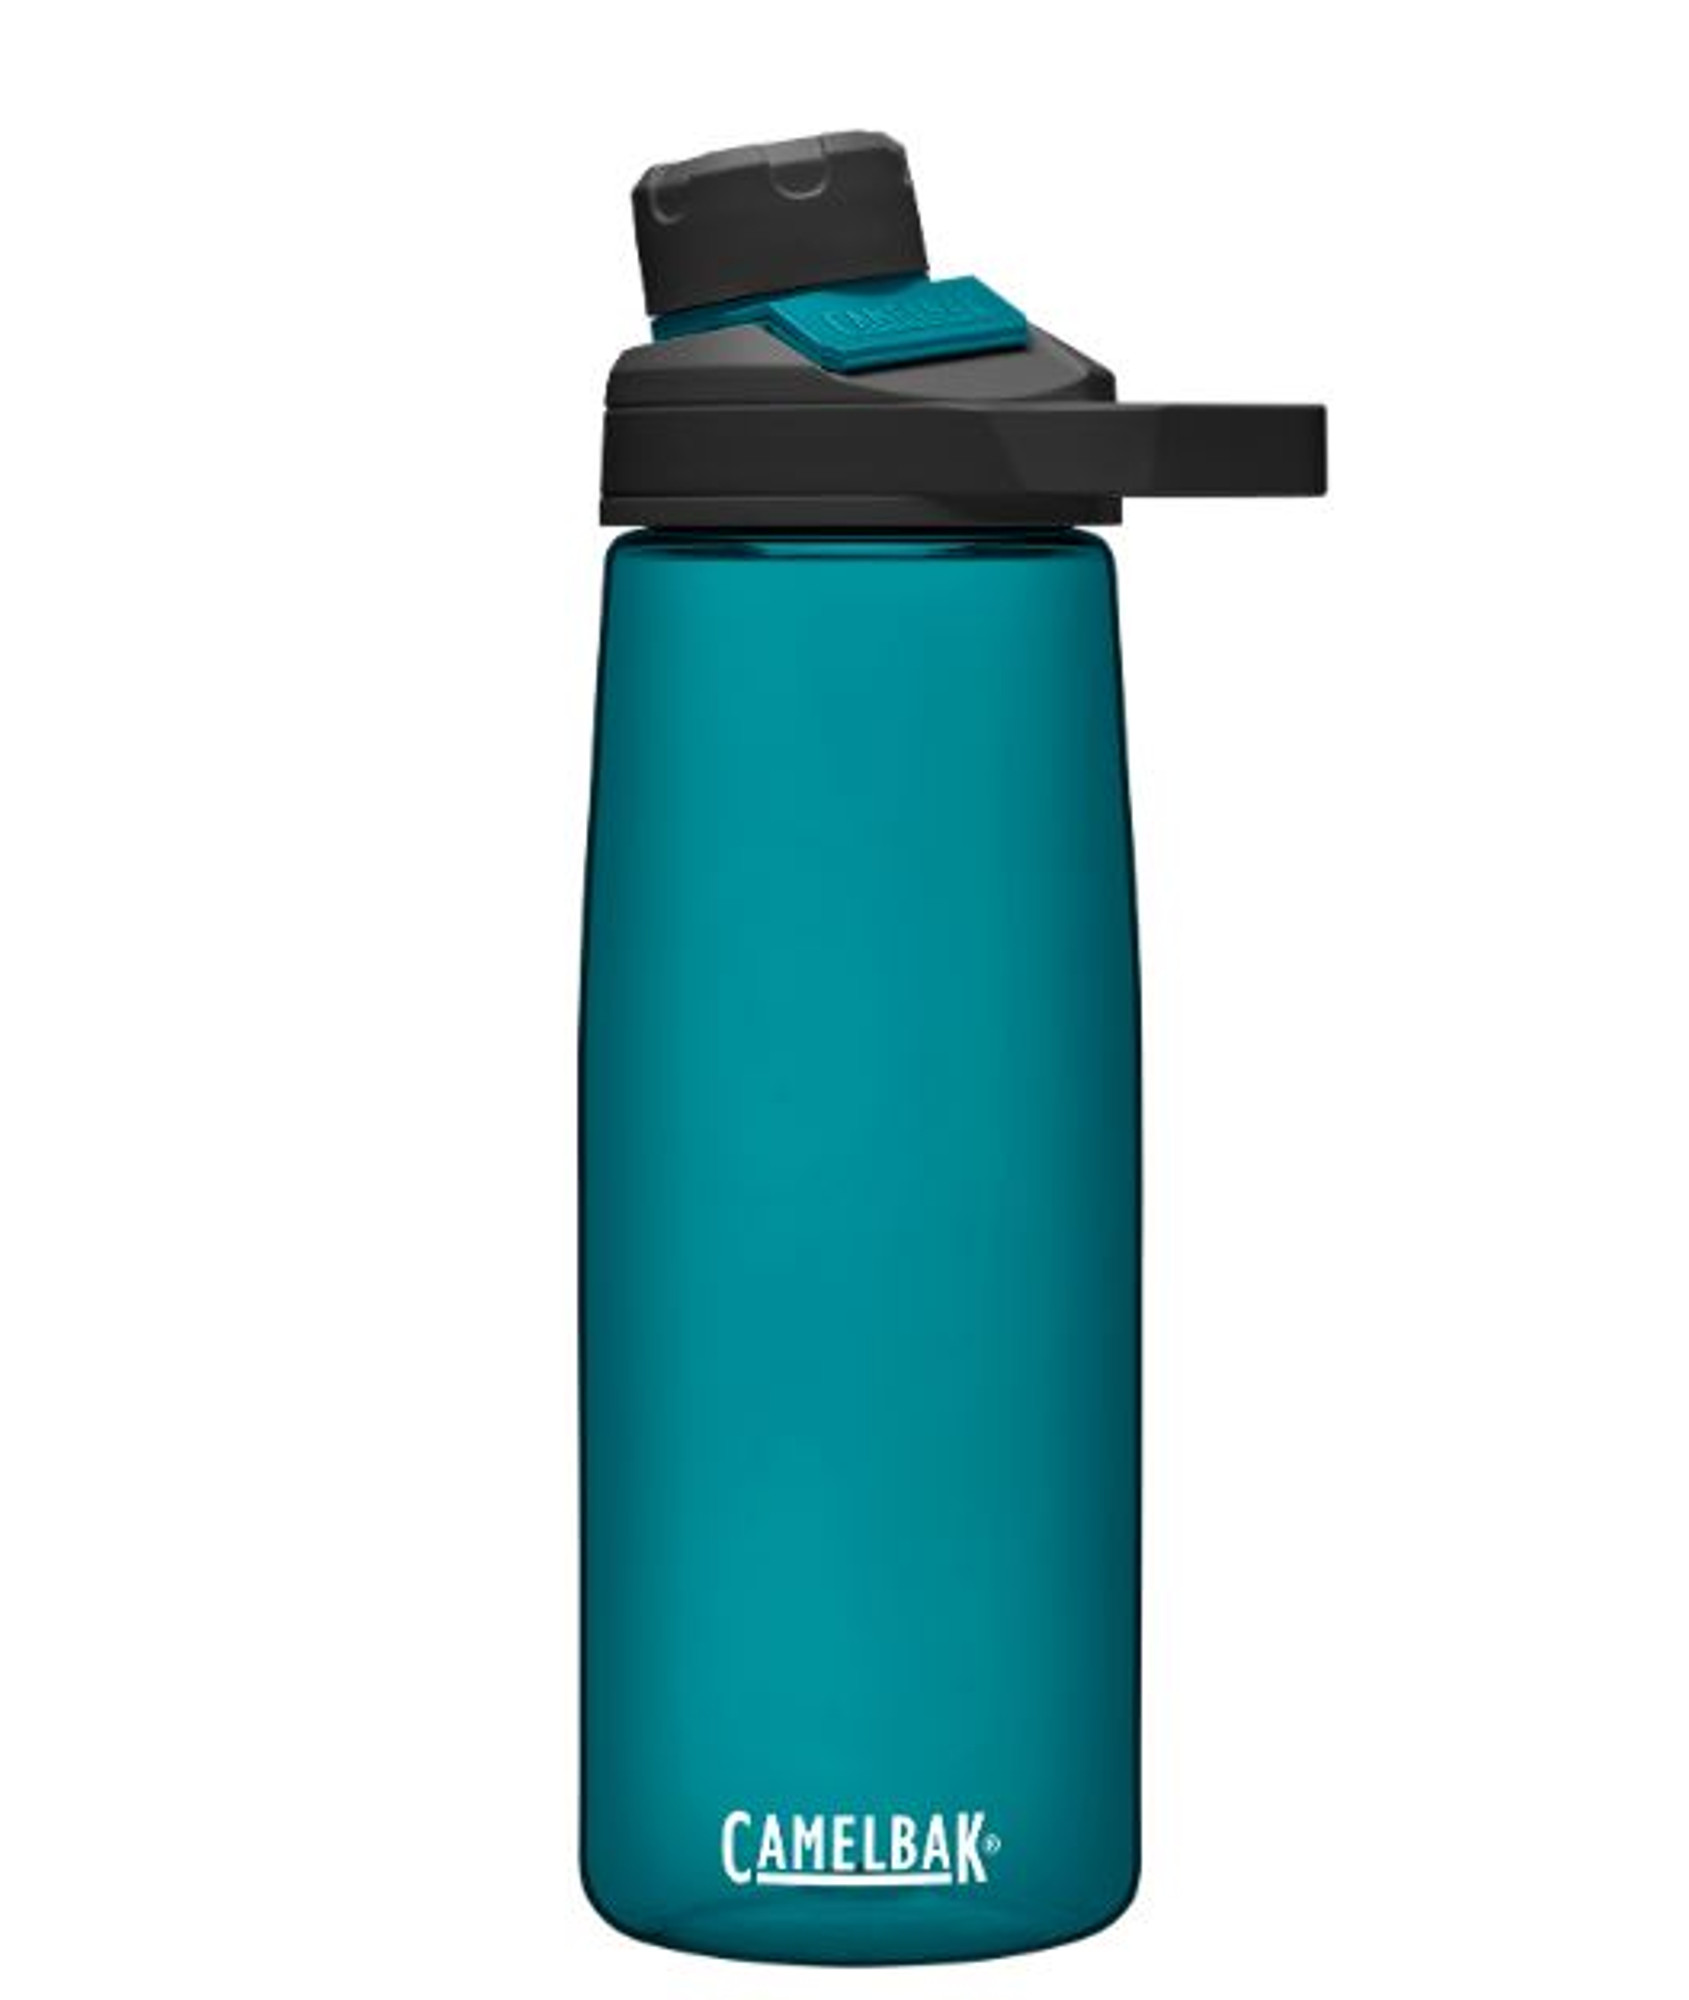 Camelbak 25oz Water Bottle HOD SKULL Blue Magnetic Cap Chute Mag Hydrate OR  Die